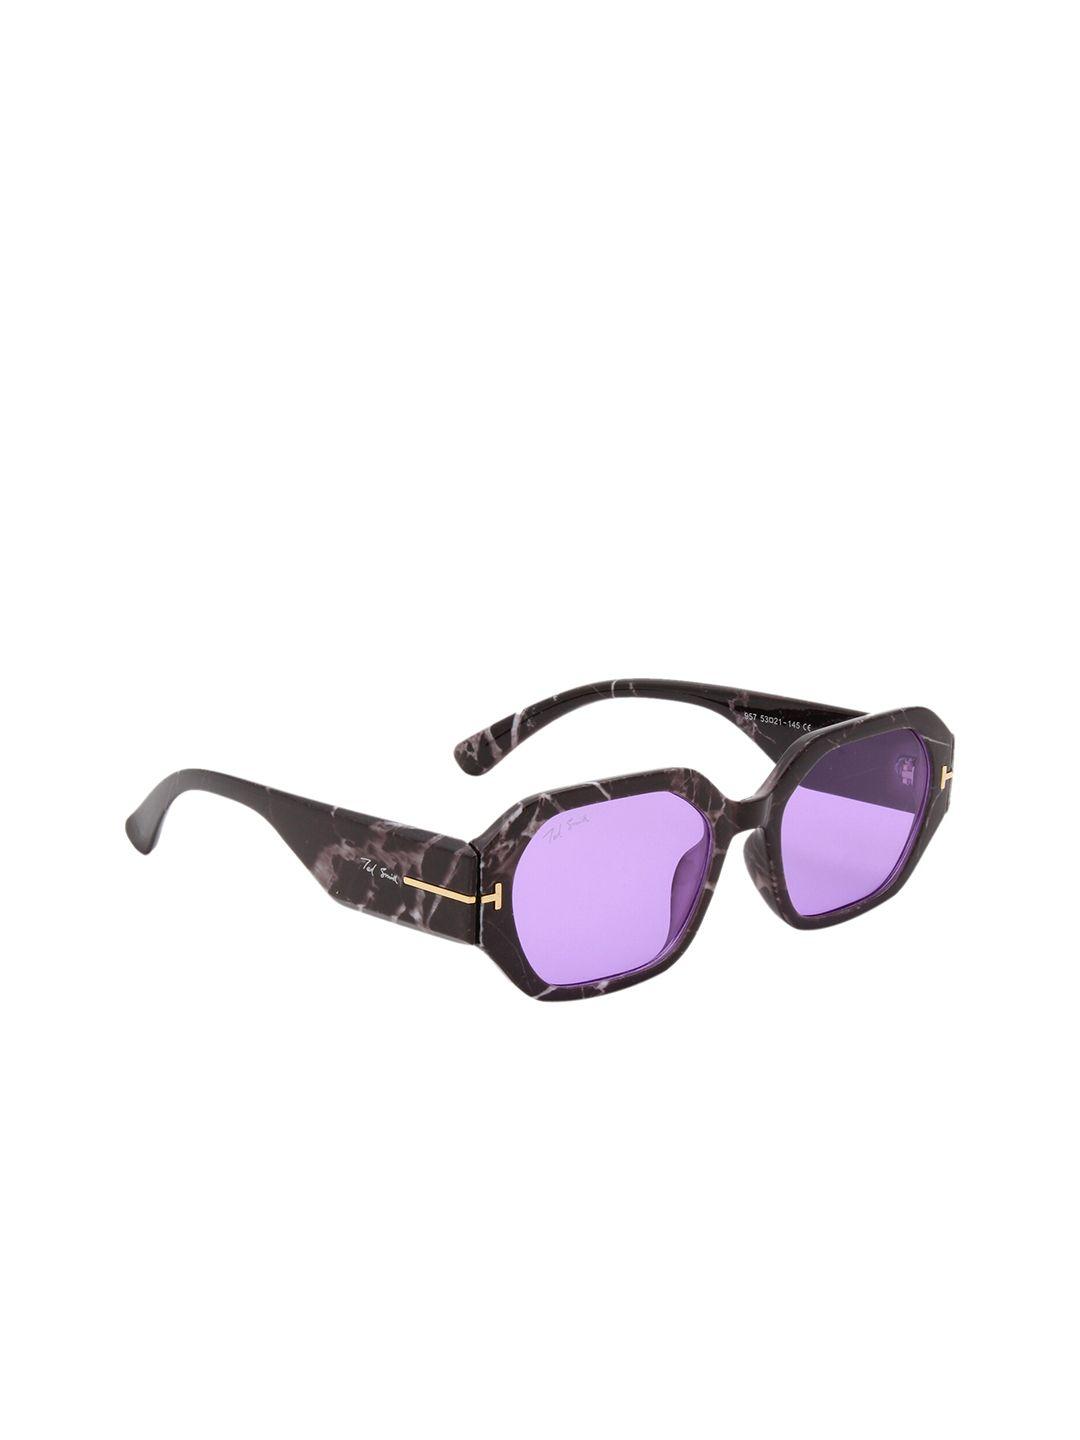 ted smith unisex purple lens & black oval sunglasses uv protected lens rapper_c5-purple